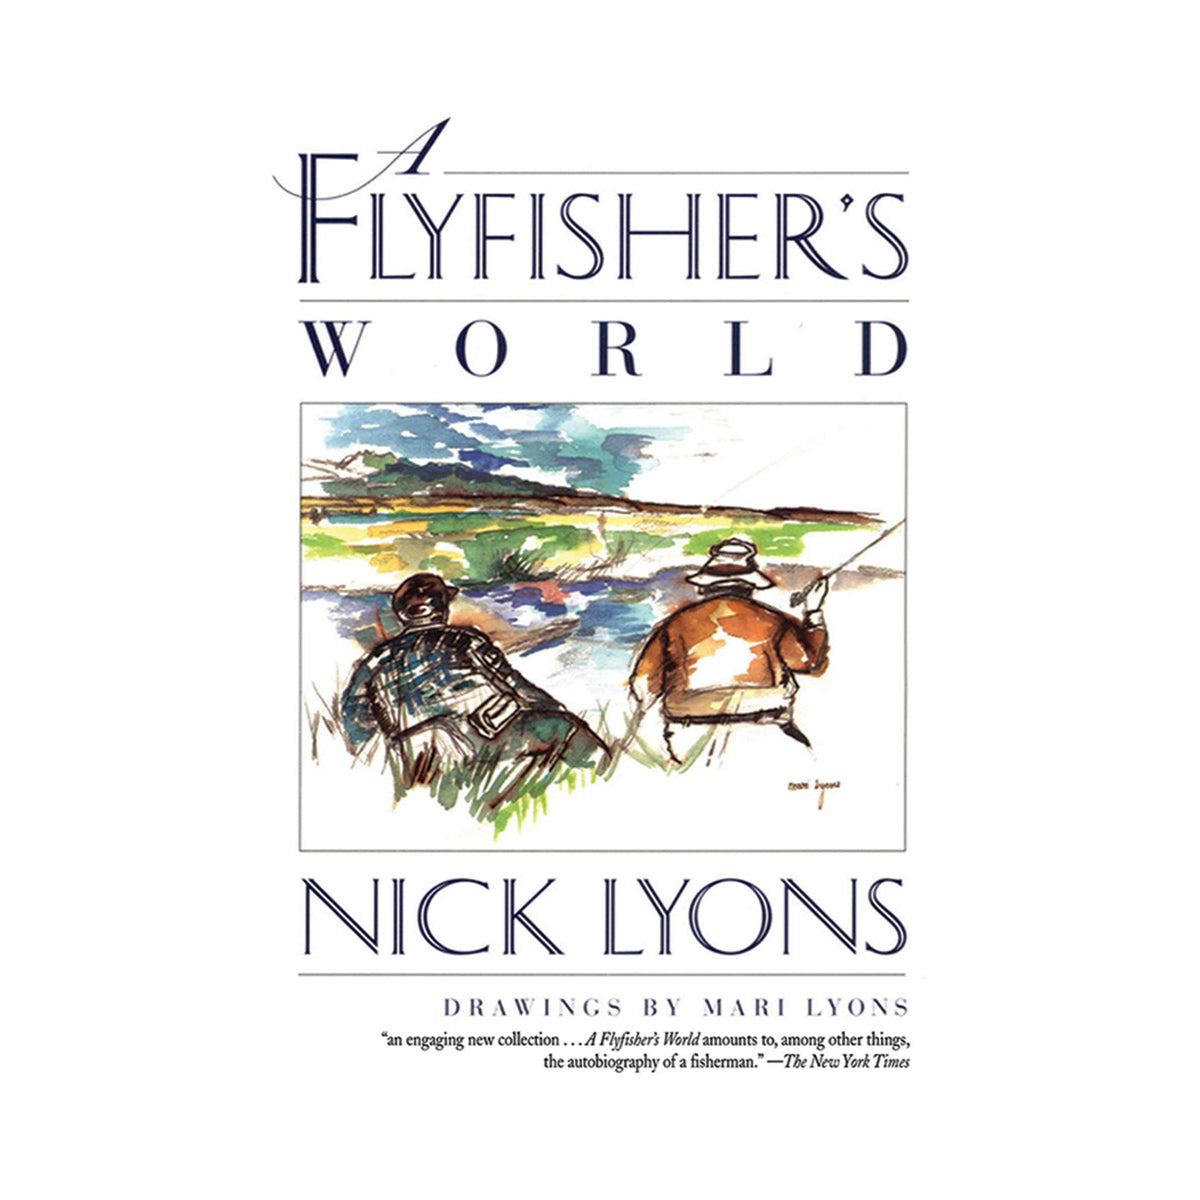 A Flyfisher's World